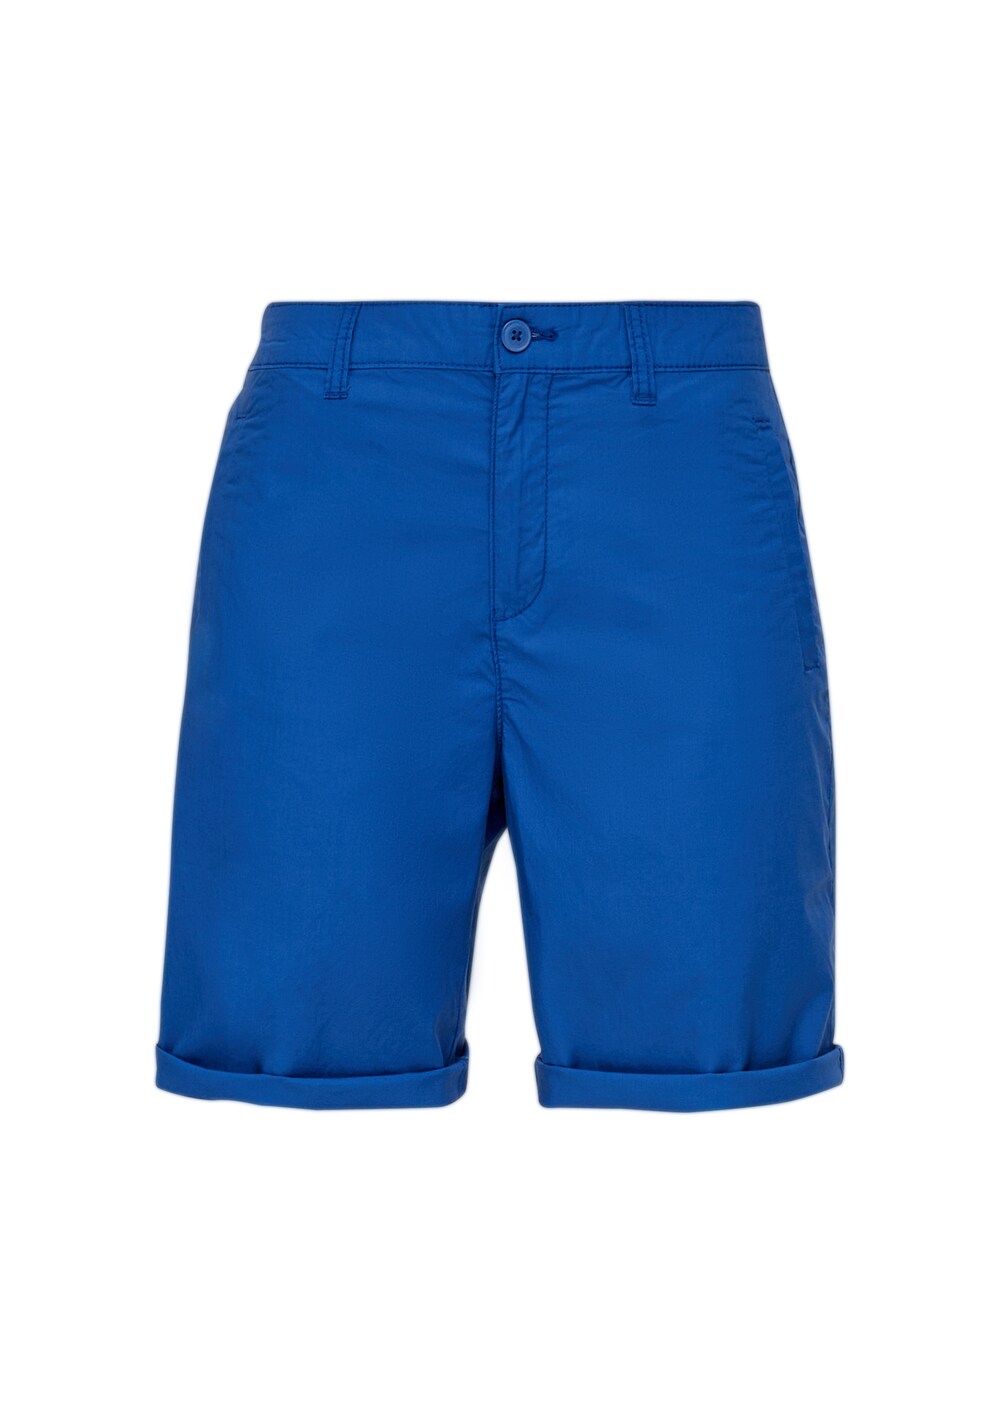 Обычные брюки чинос S.Oliver, синий обычные брюки чинос solid thereon синий